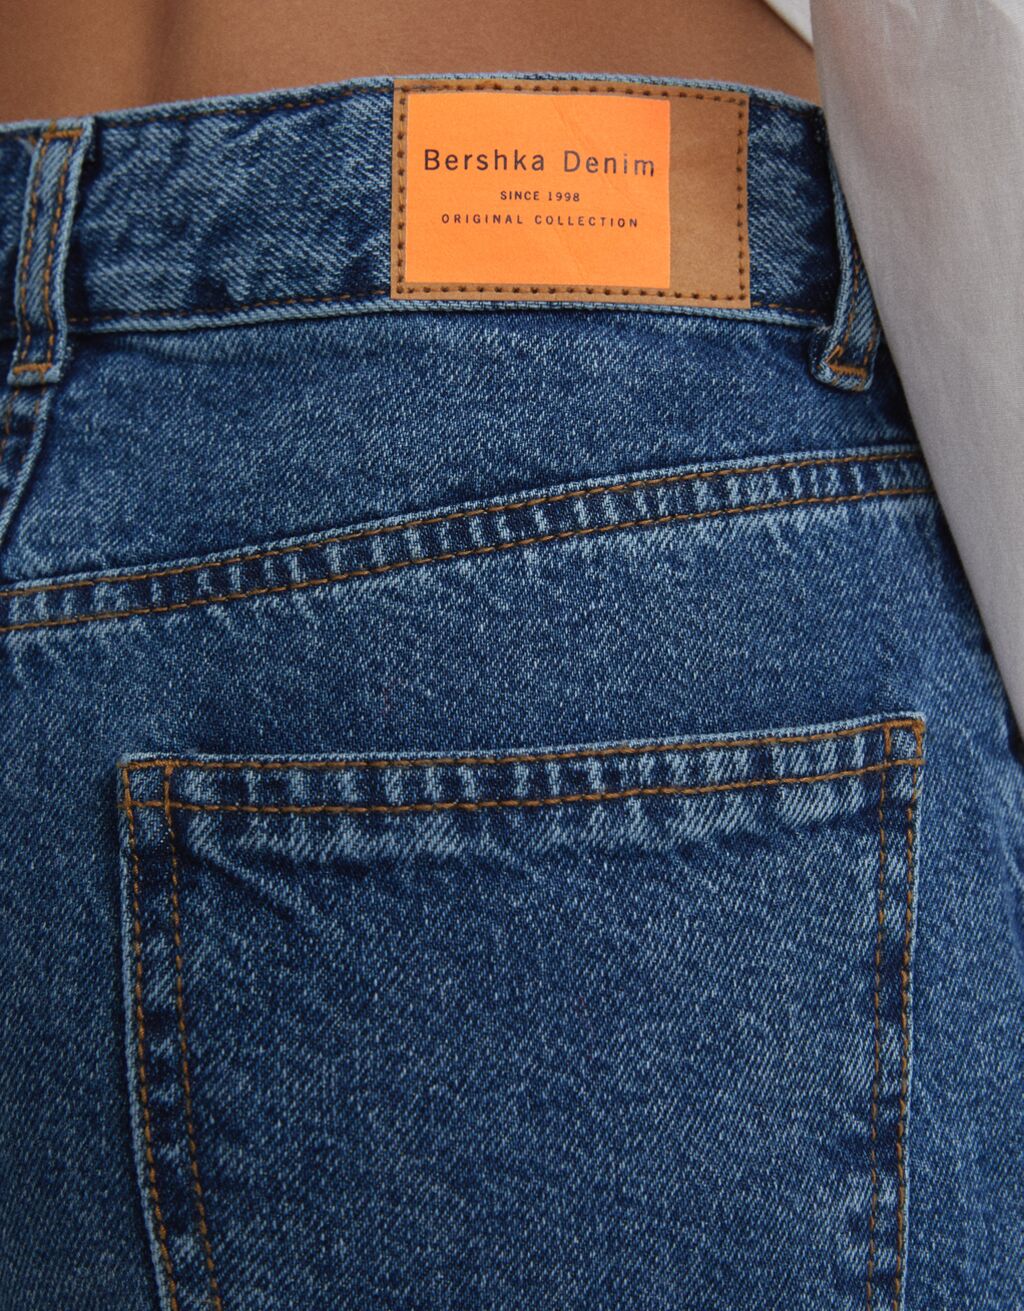 bershka denim collection jeans